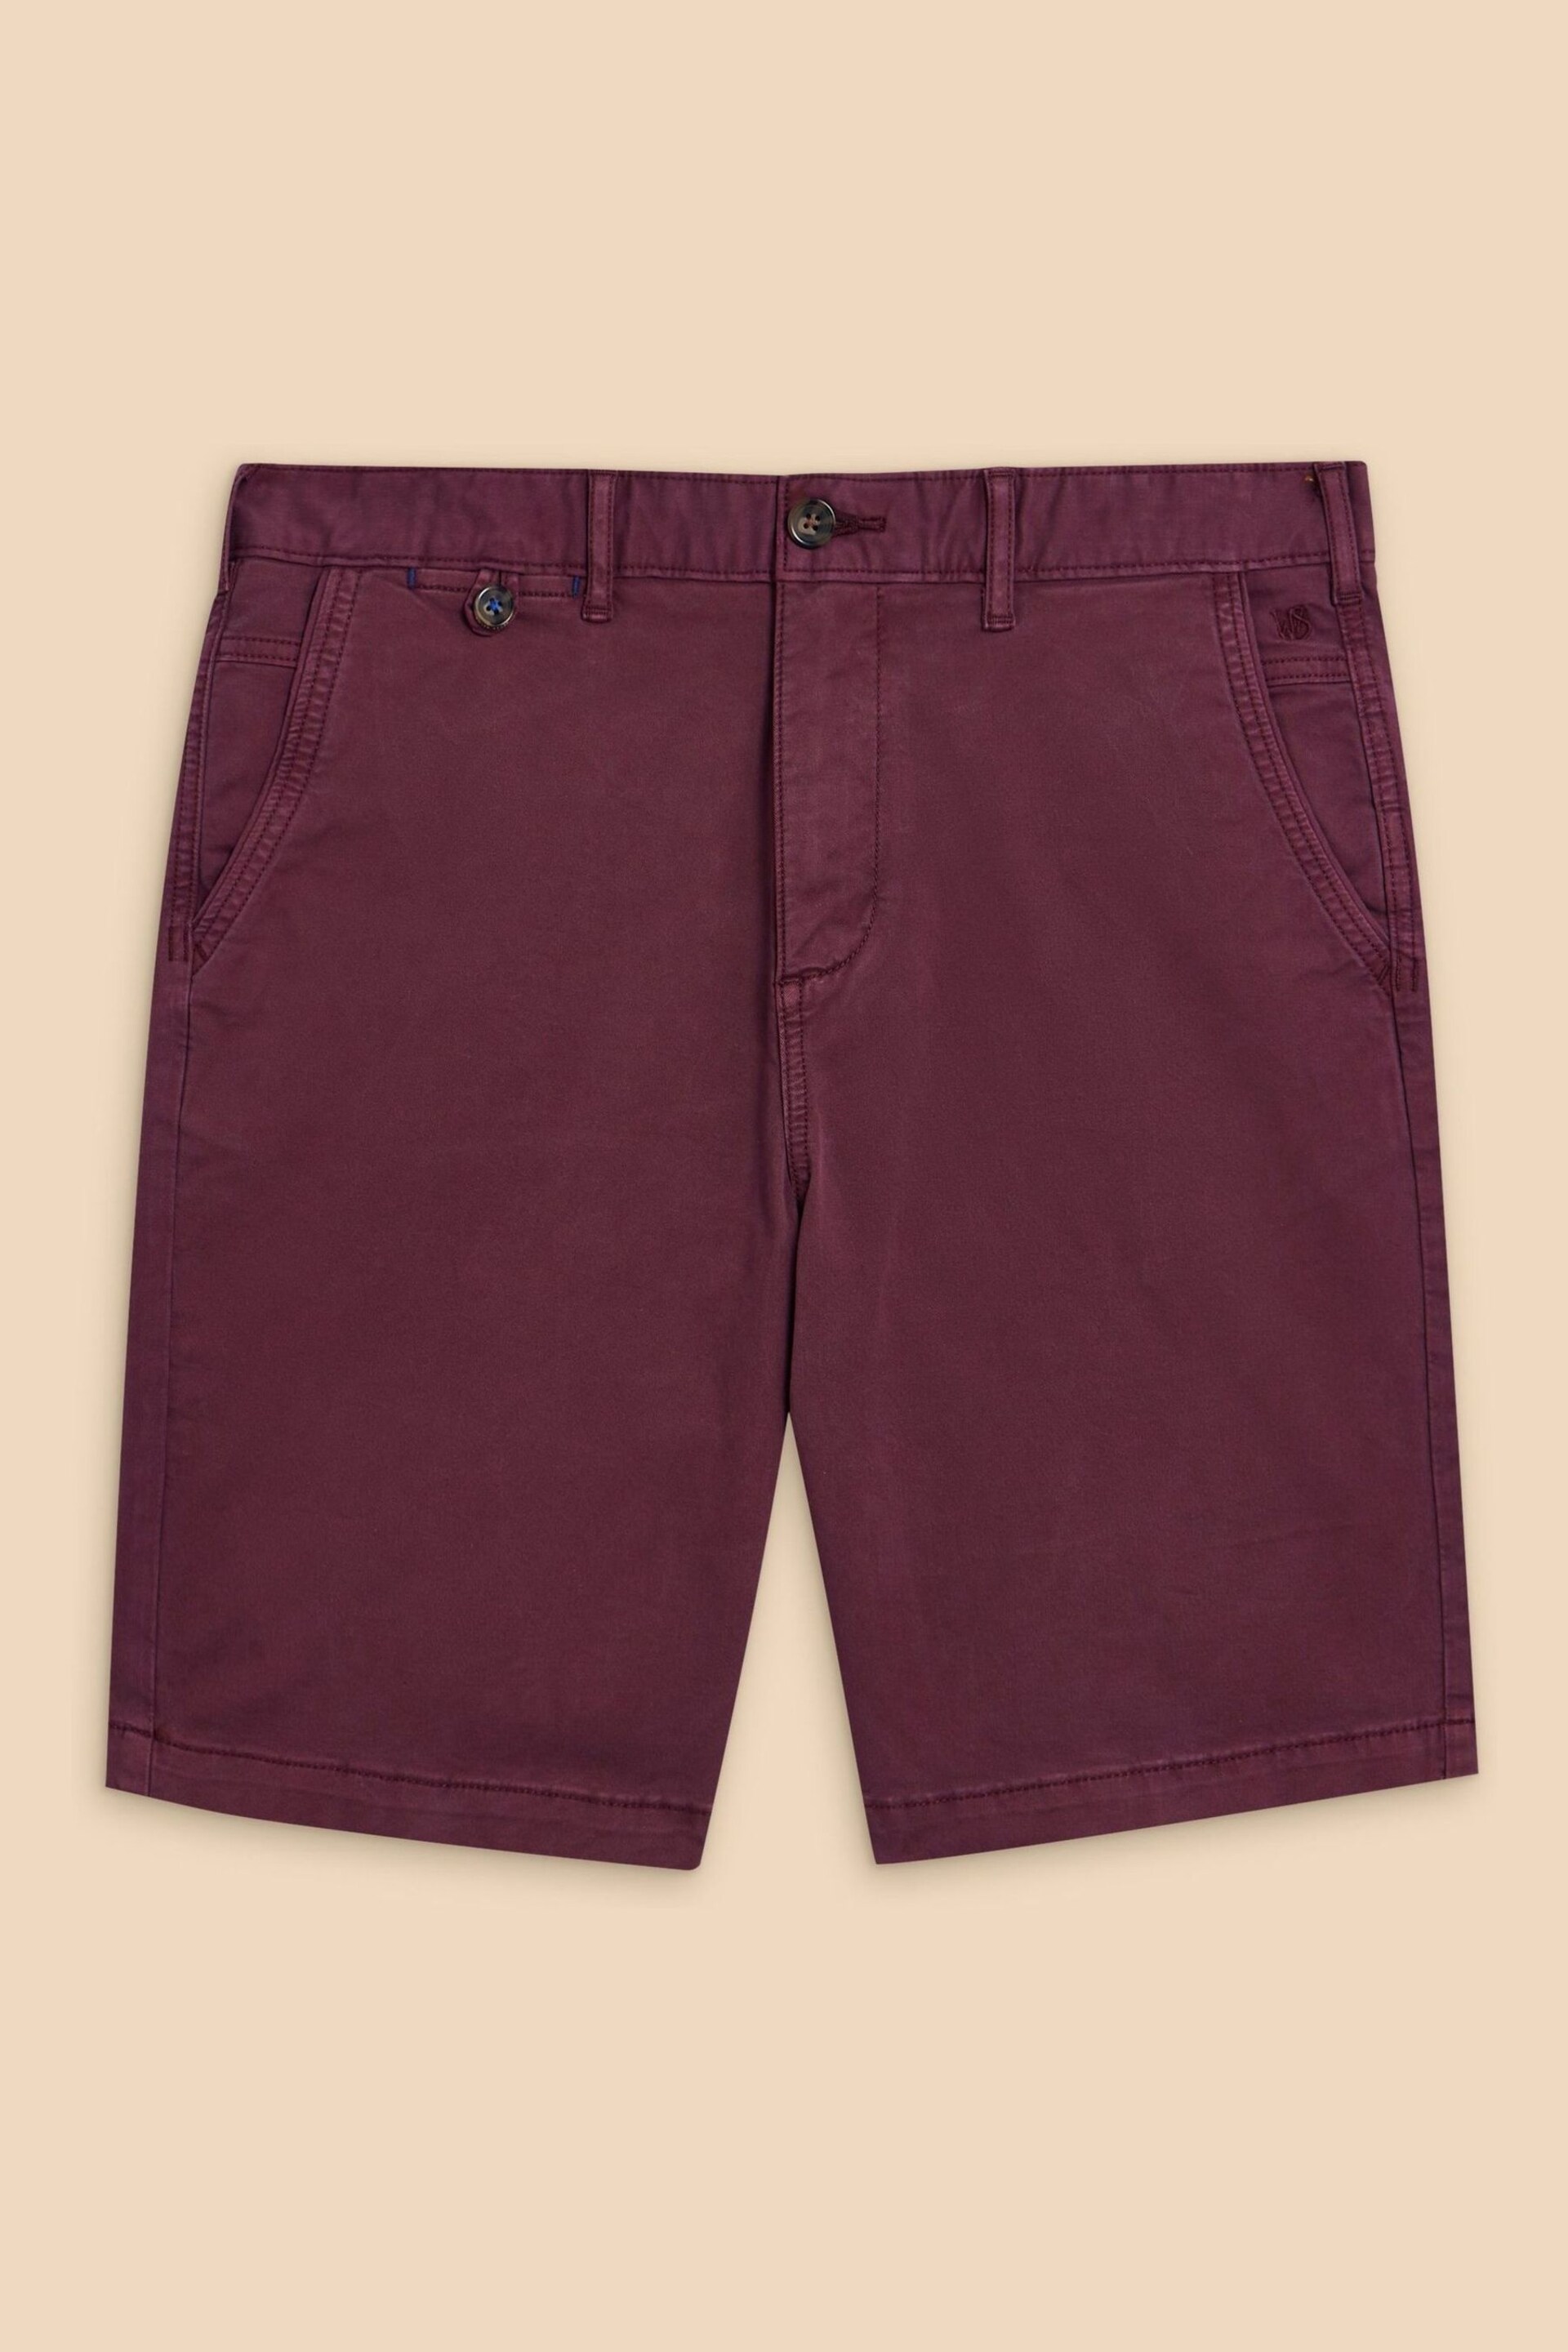 White Stuff Purple Sutton Organic Chino Shorts - Image 5 of 7